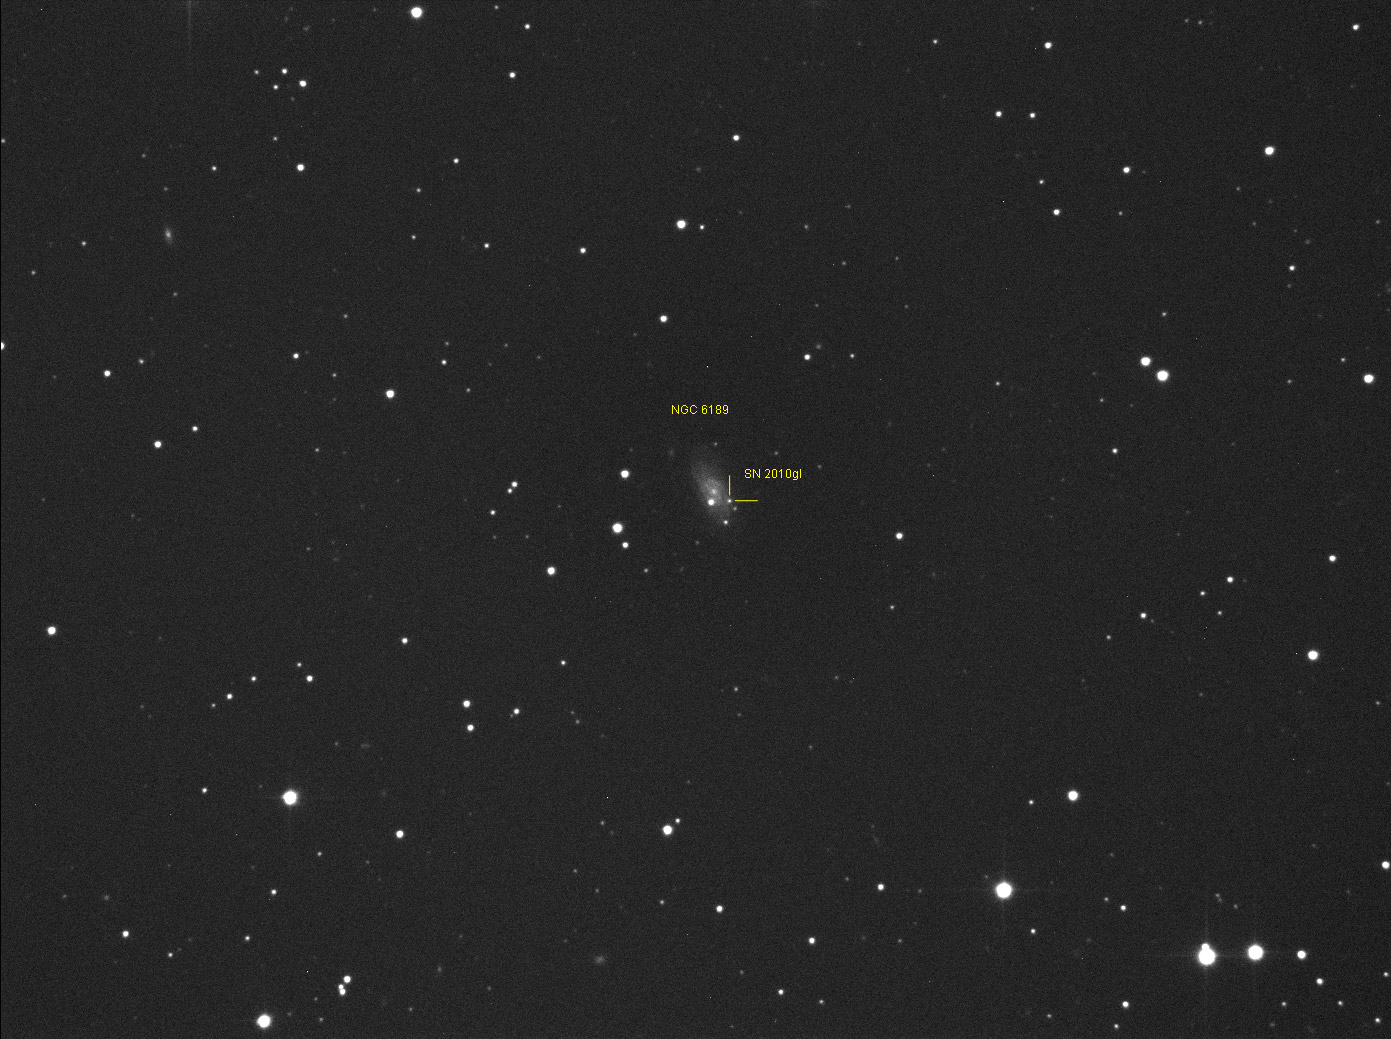 Supernova SN2010gl am 21. August 2010